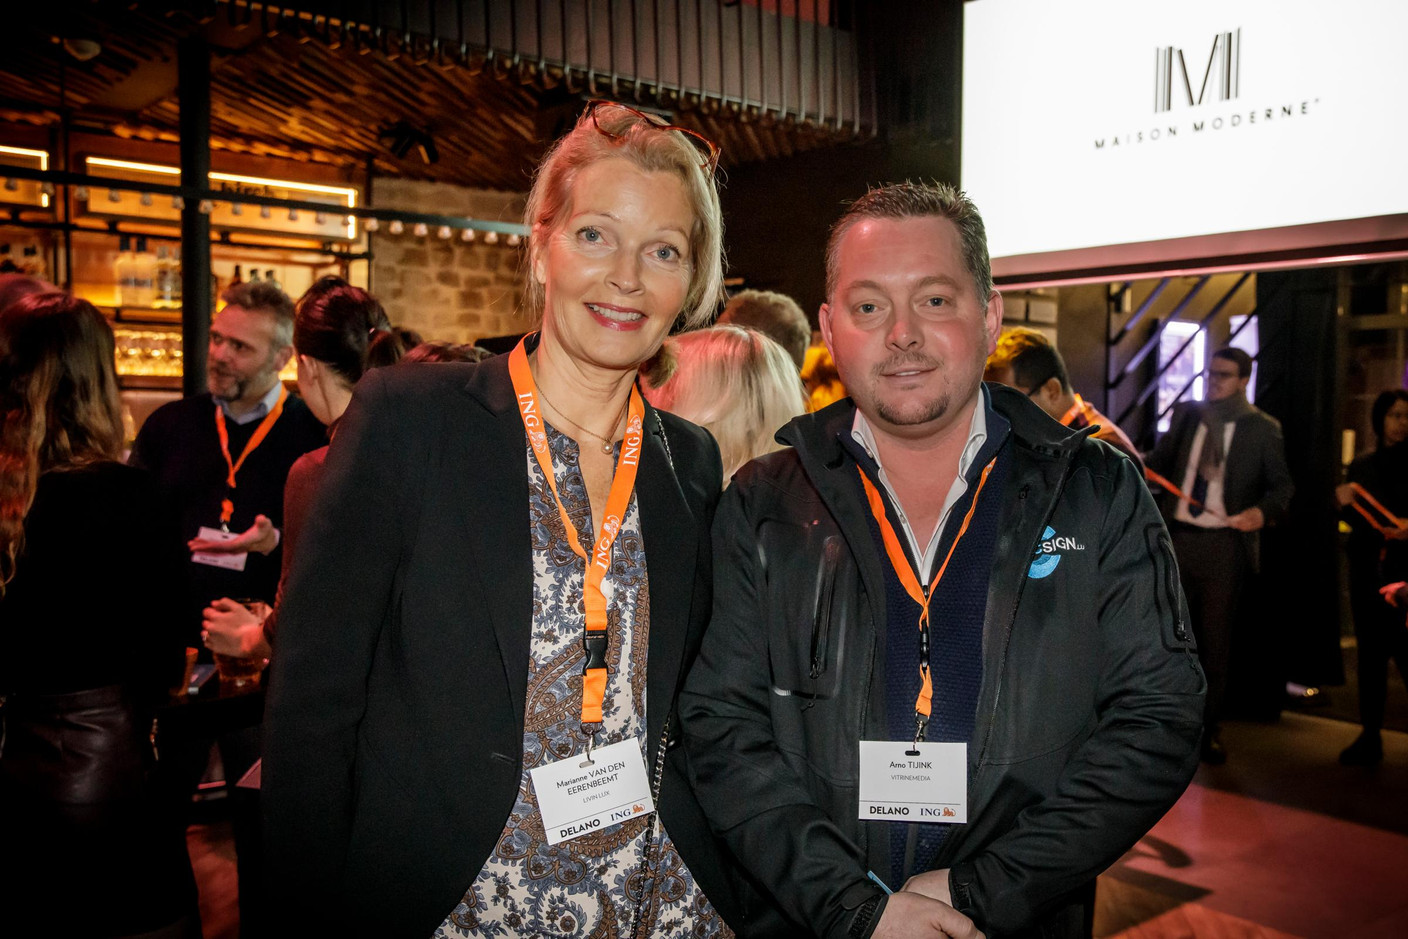 Marianne Van Den Eerenbeemt (LivinLux) et Arno Tijink (Vitrine Media) (Photo: Jan Hanrion / Maison Moderne)